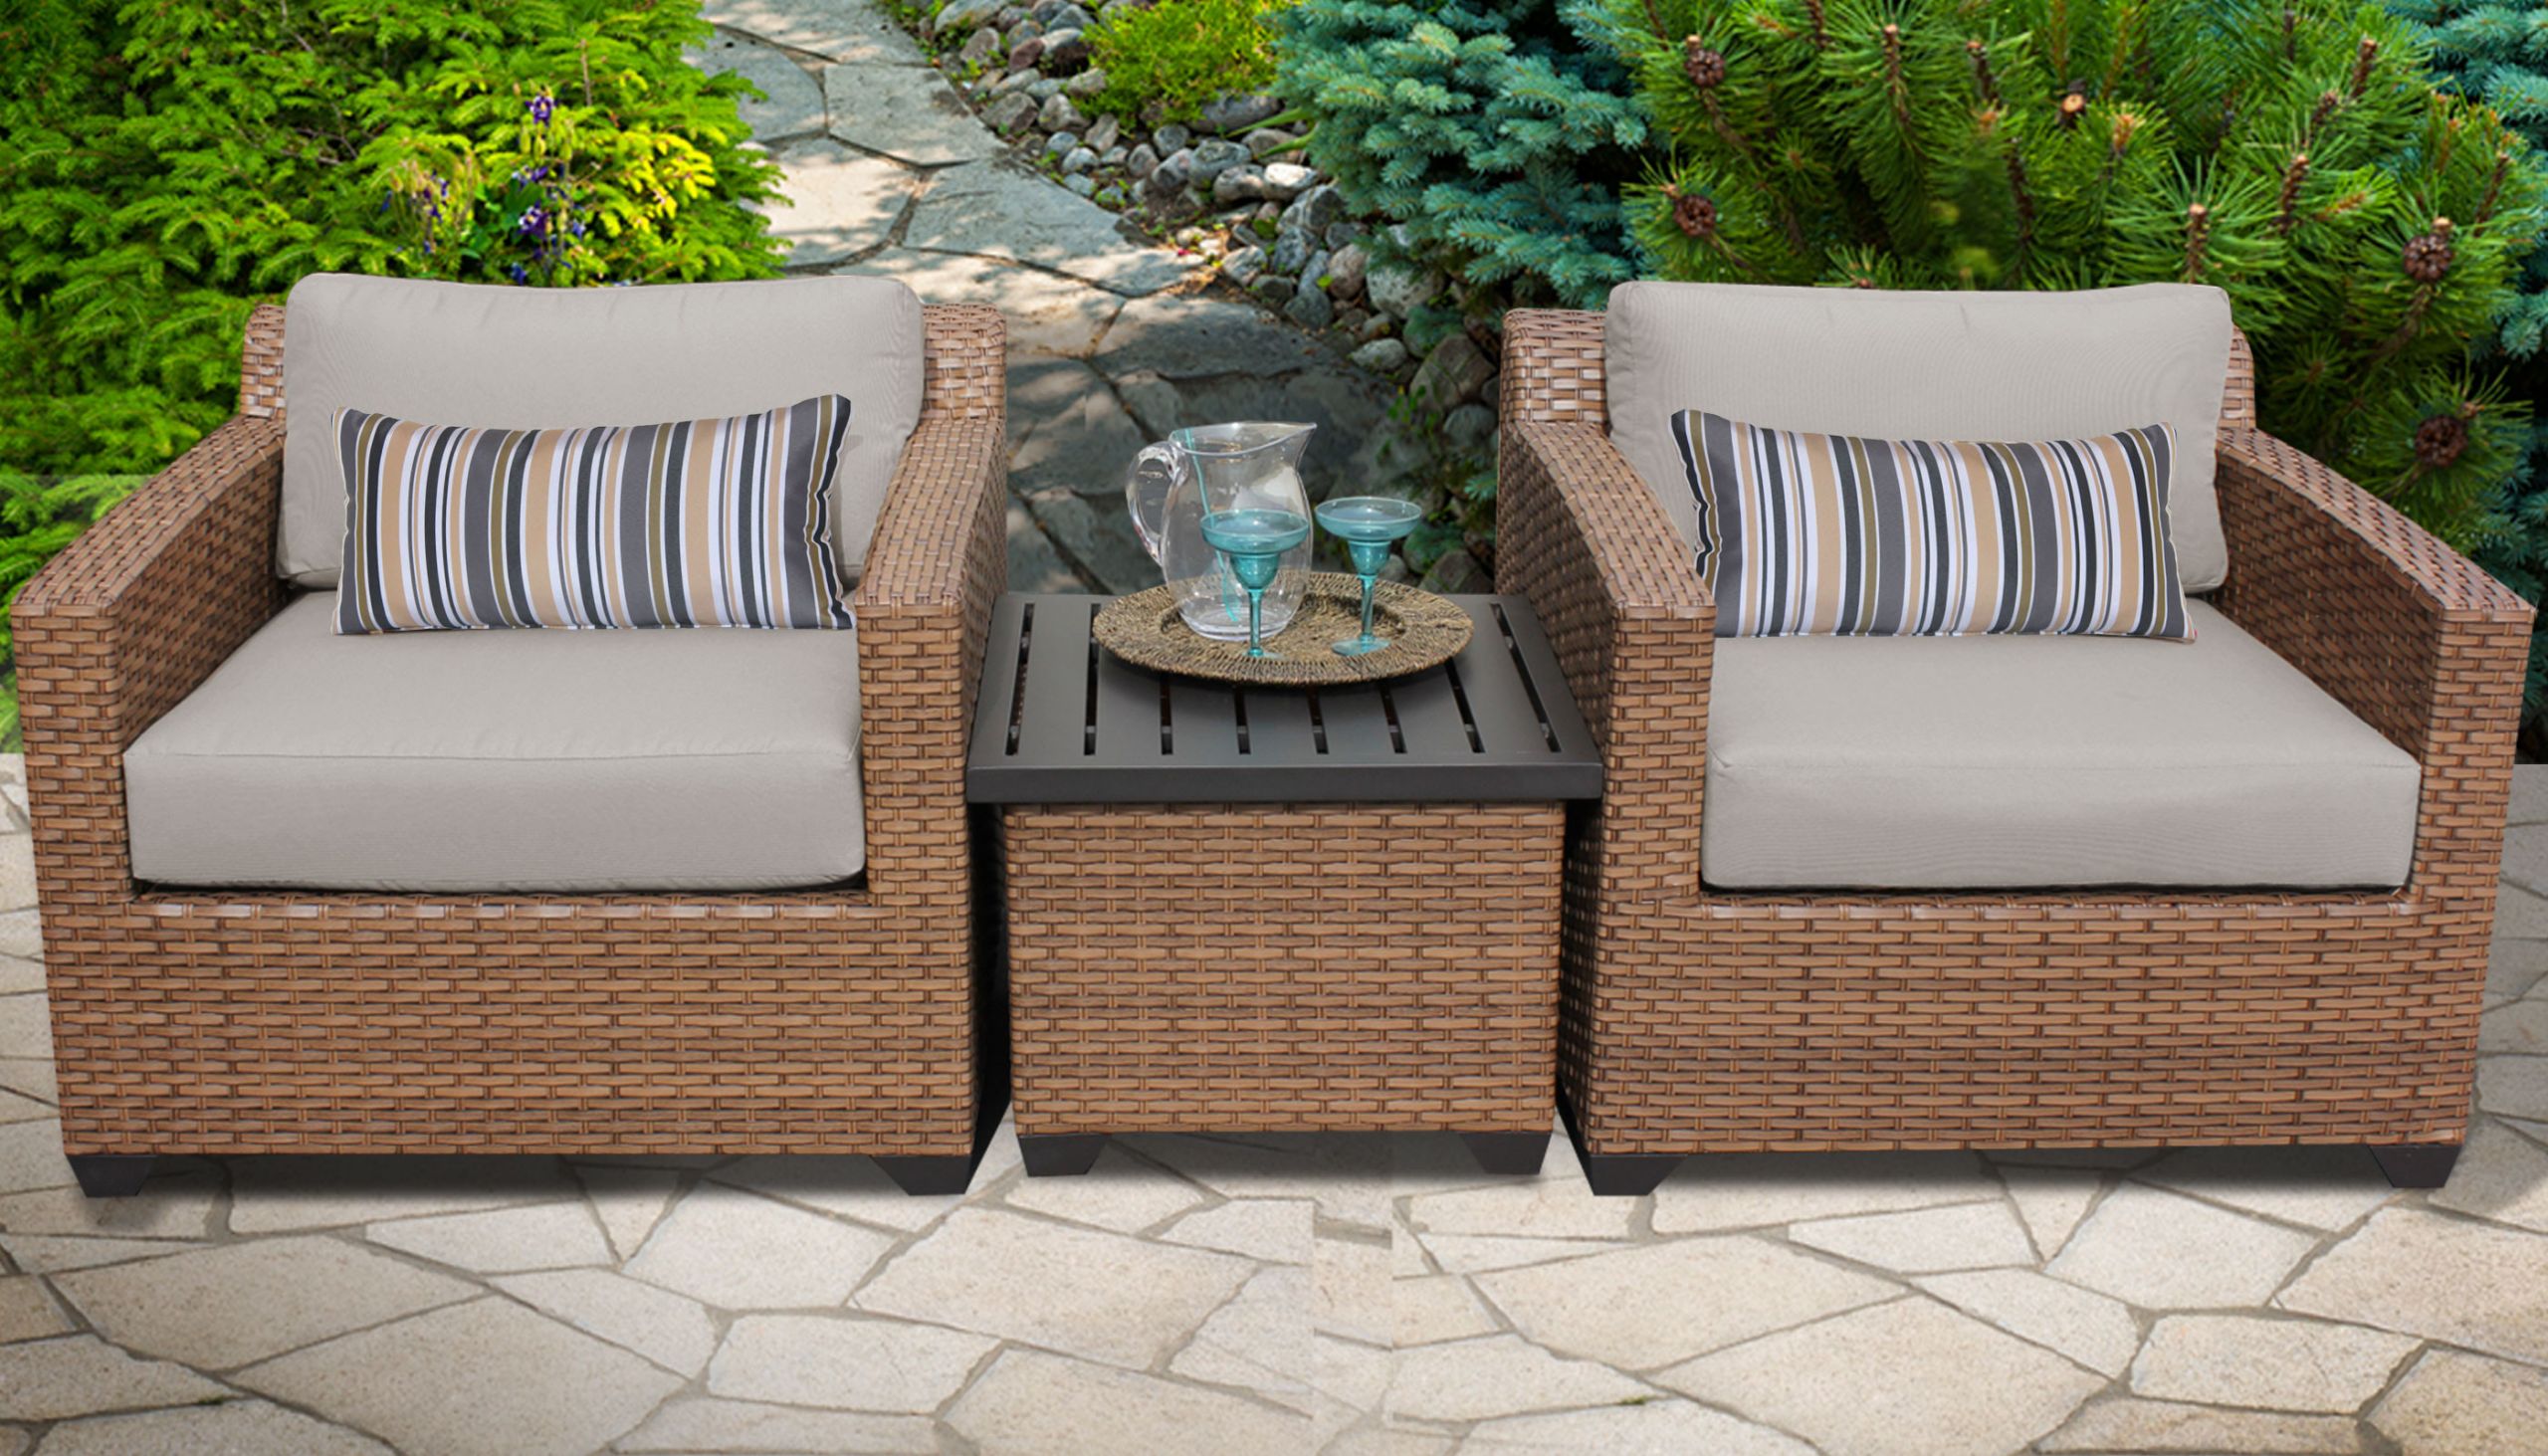 Backyard Furniture Sets
 TK Classics Laguna 3 Piece Outdoor Wicker Patio